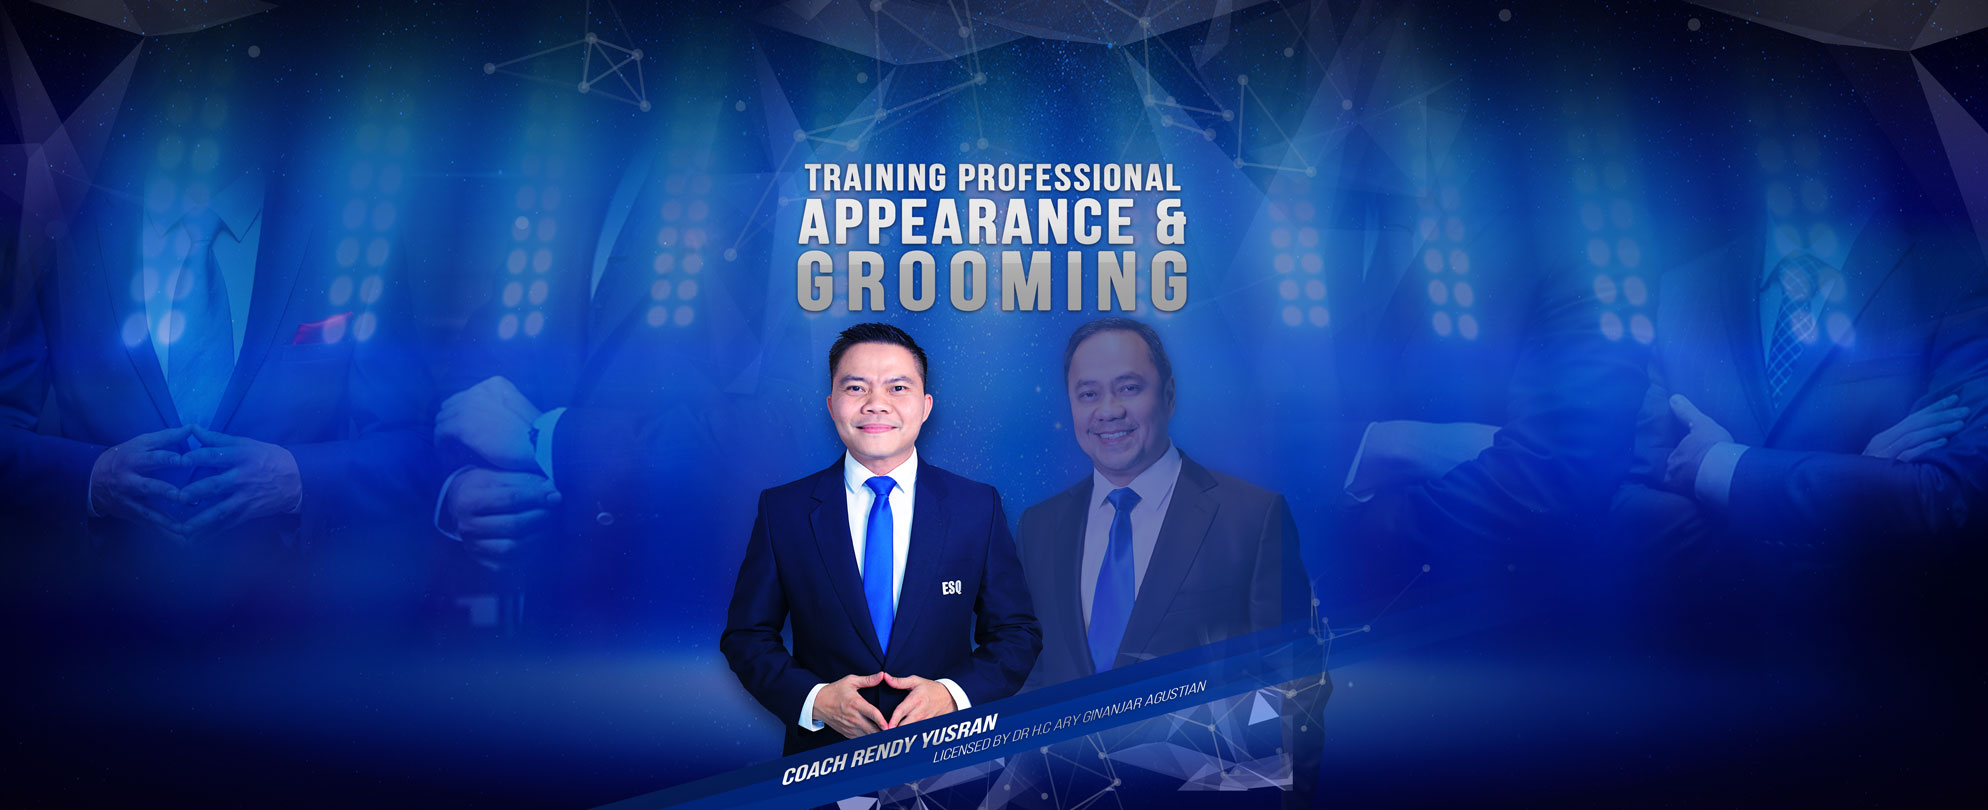 Training Professional Appearance & Grooming - Pelatihan Pengembangan Diri Membangun Citra Positif